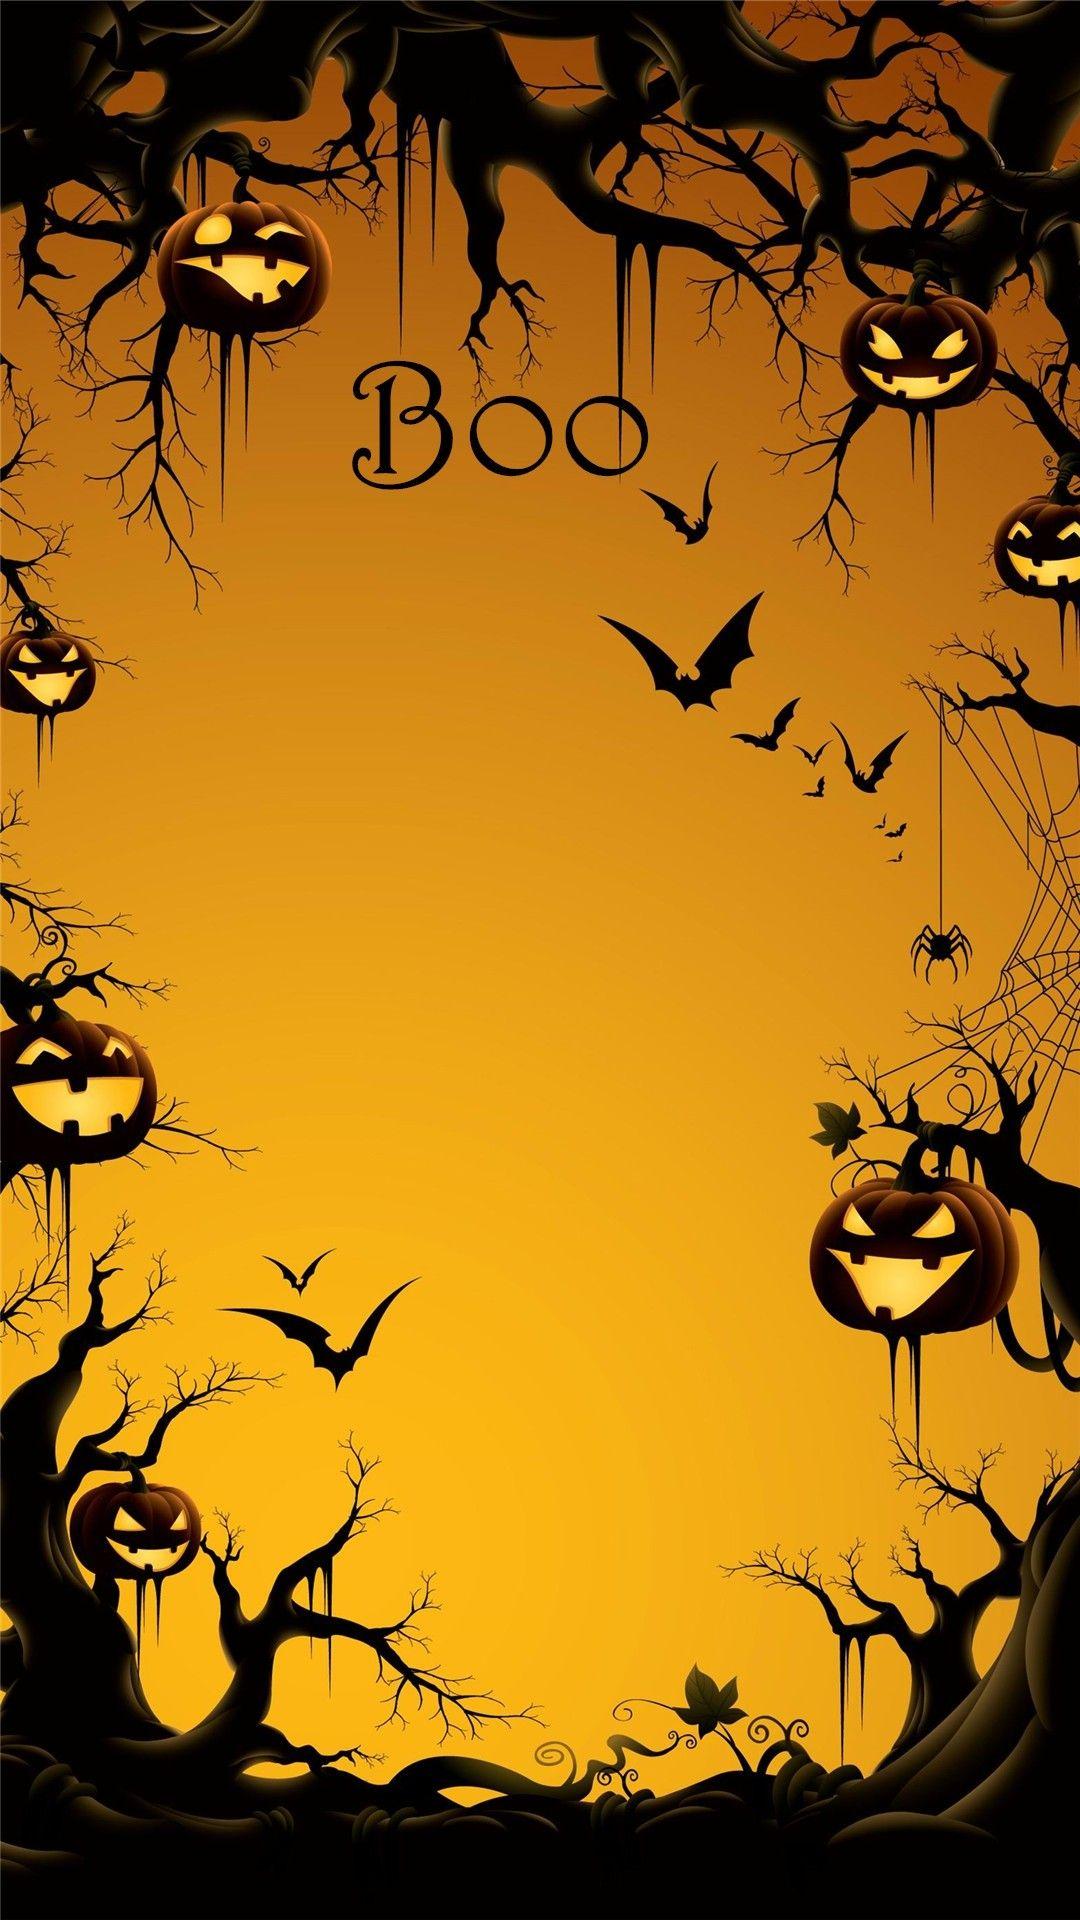 Boo Halloween iPhone 6 plus wallpaper with pumpkin on